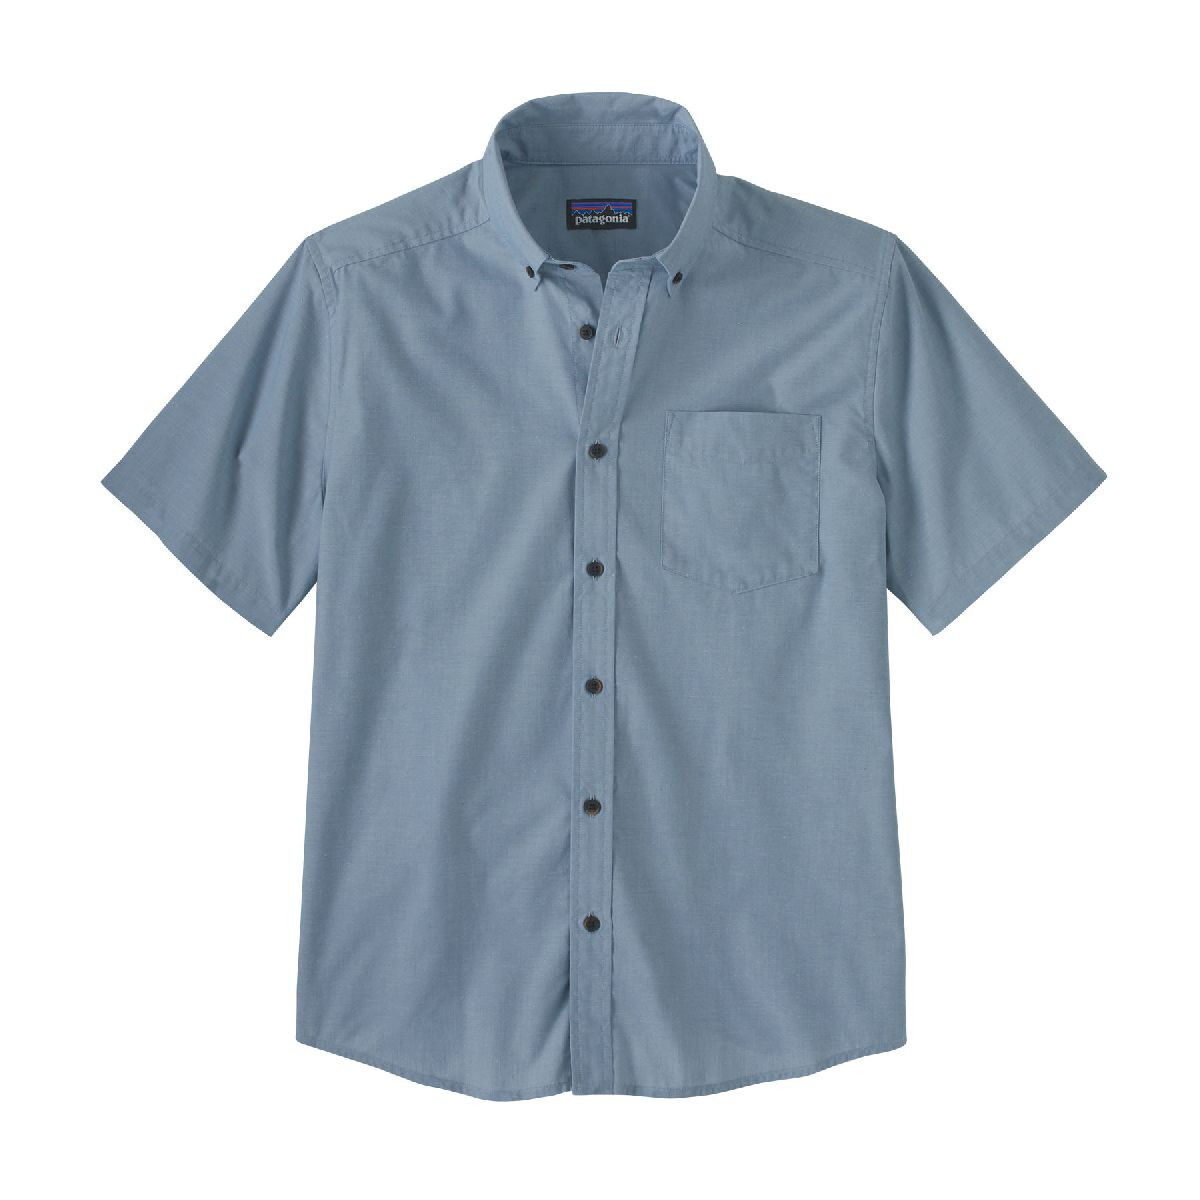 Patagonia Daily Shirt - Skjorte - Herrer